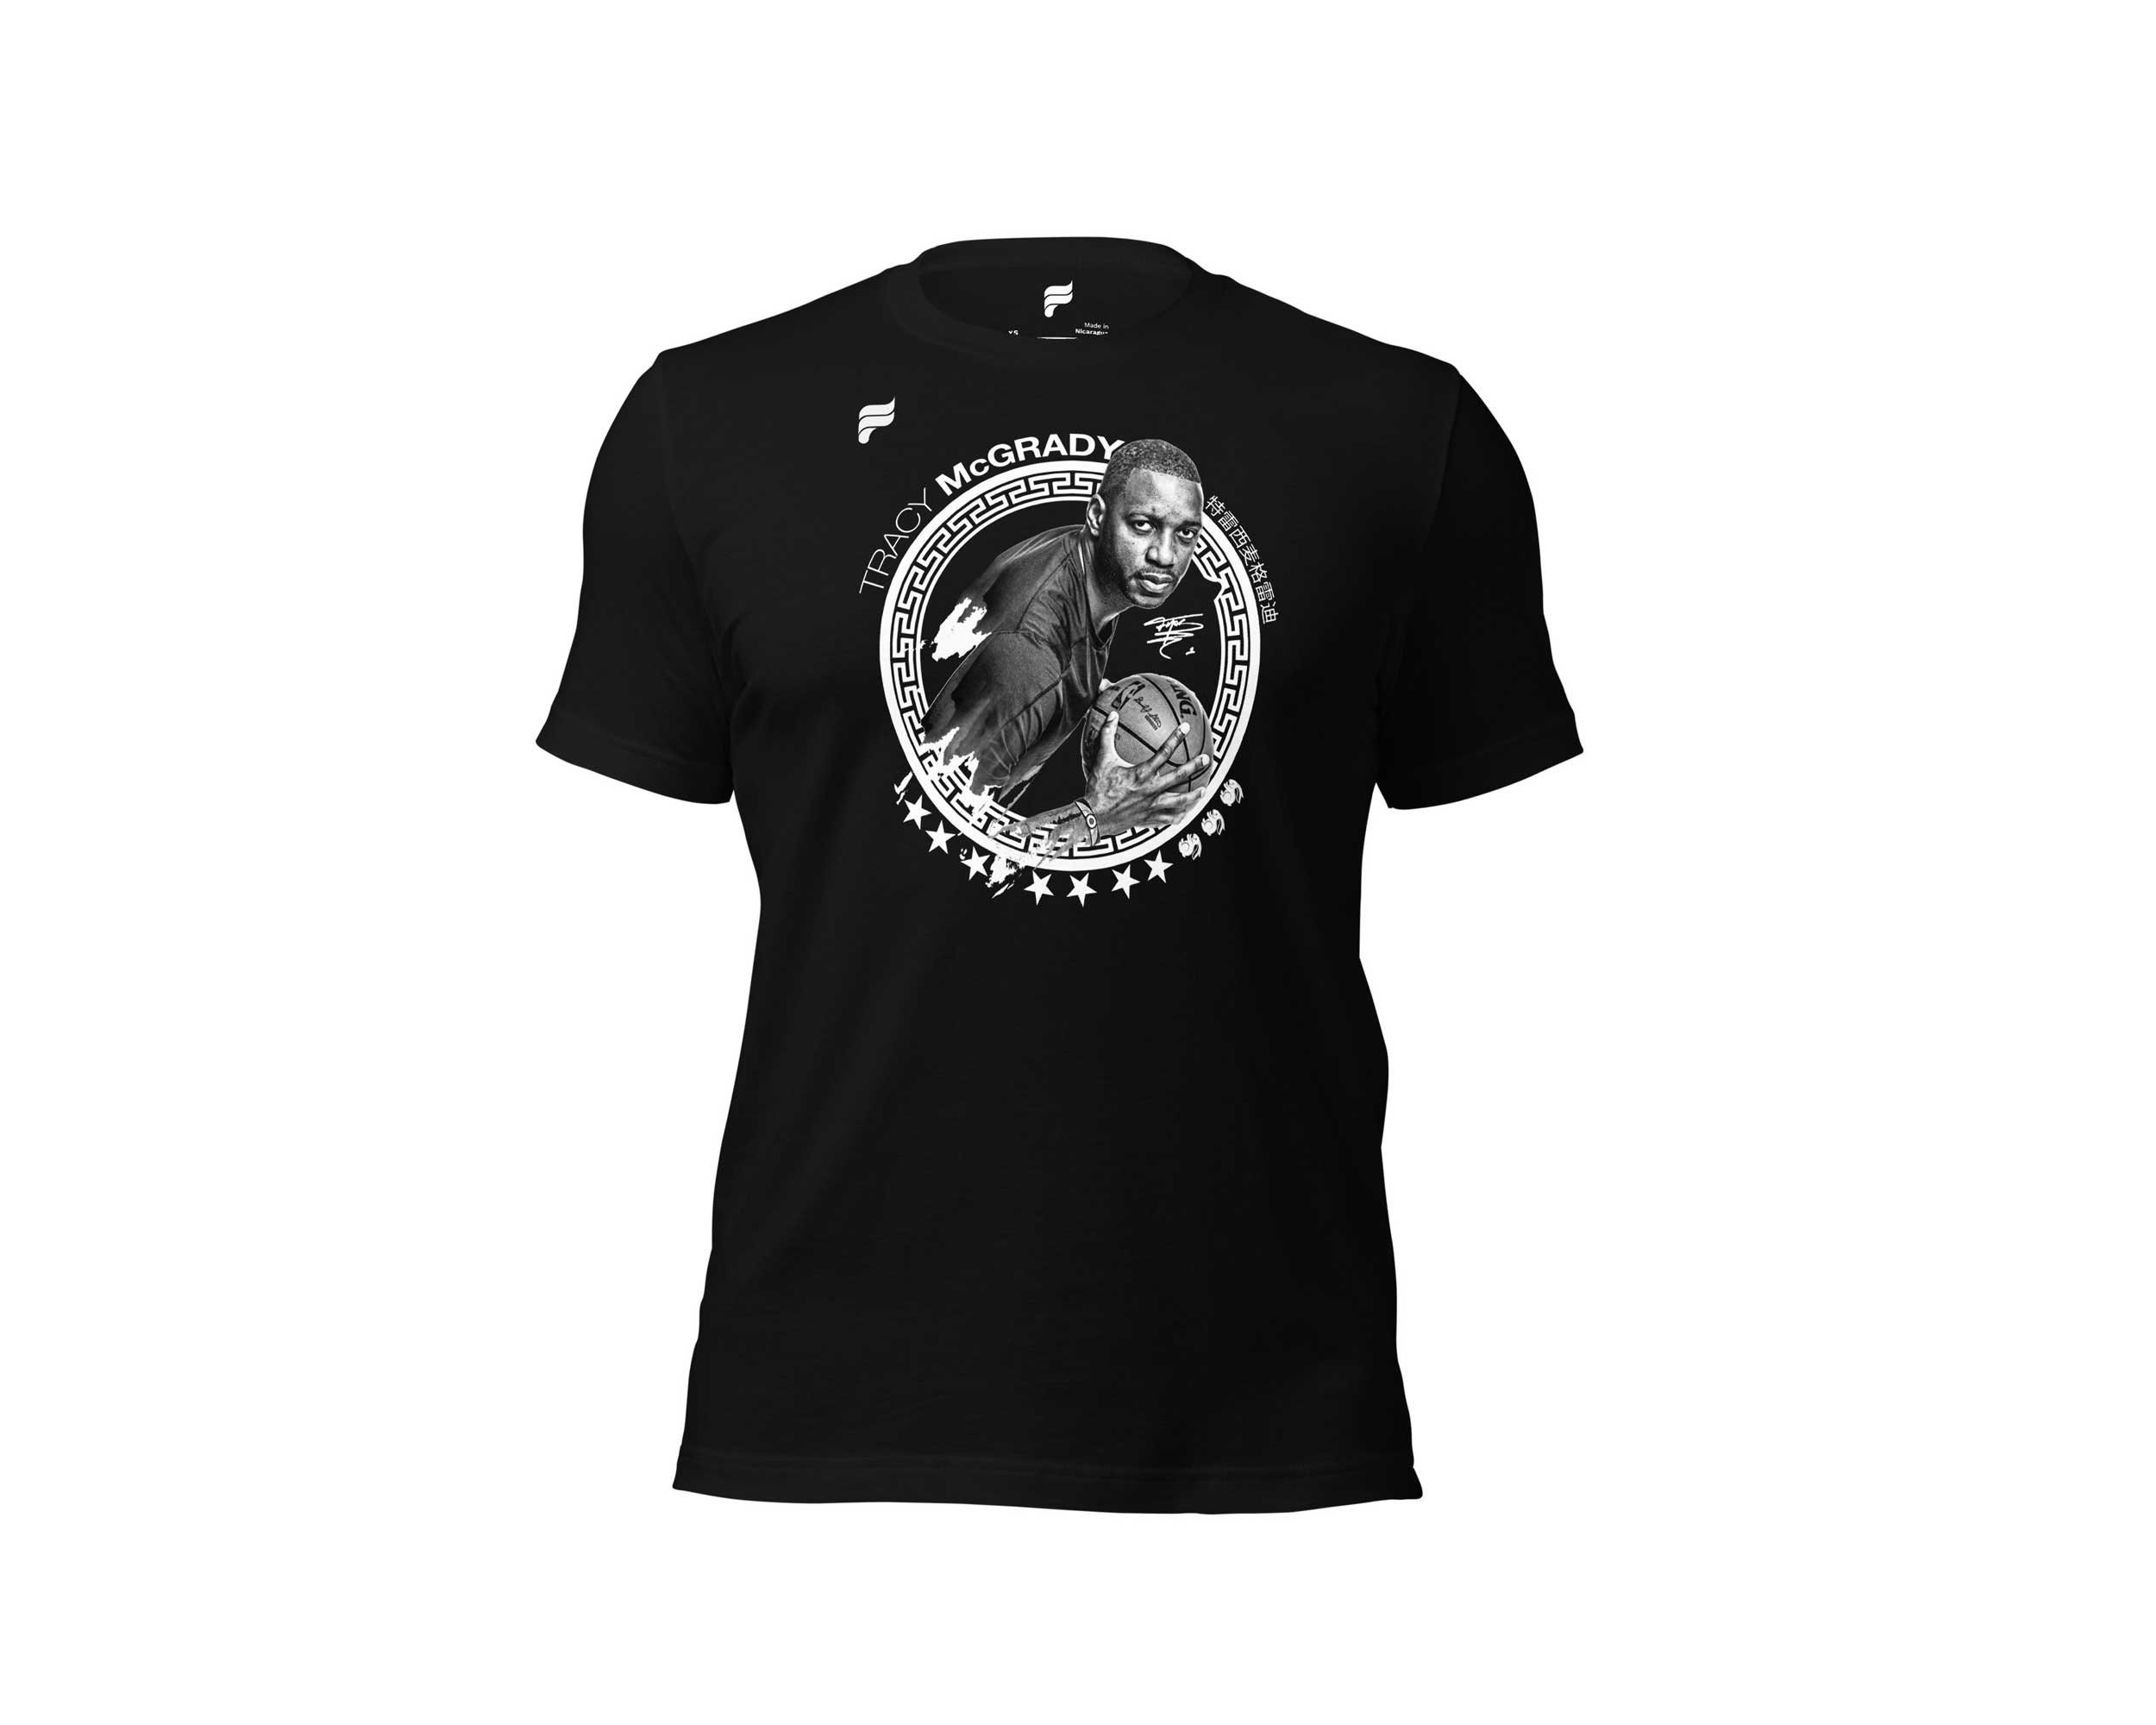 Tracy McGrady - Black / White T-Shirt graphic t shirt hippie